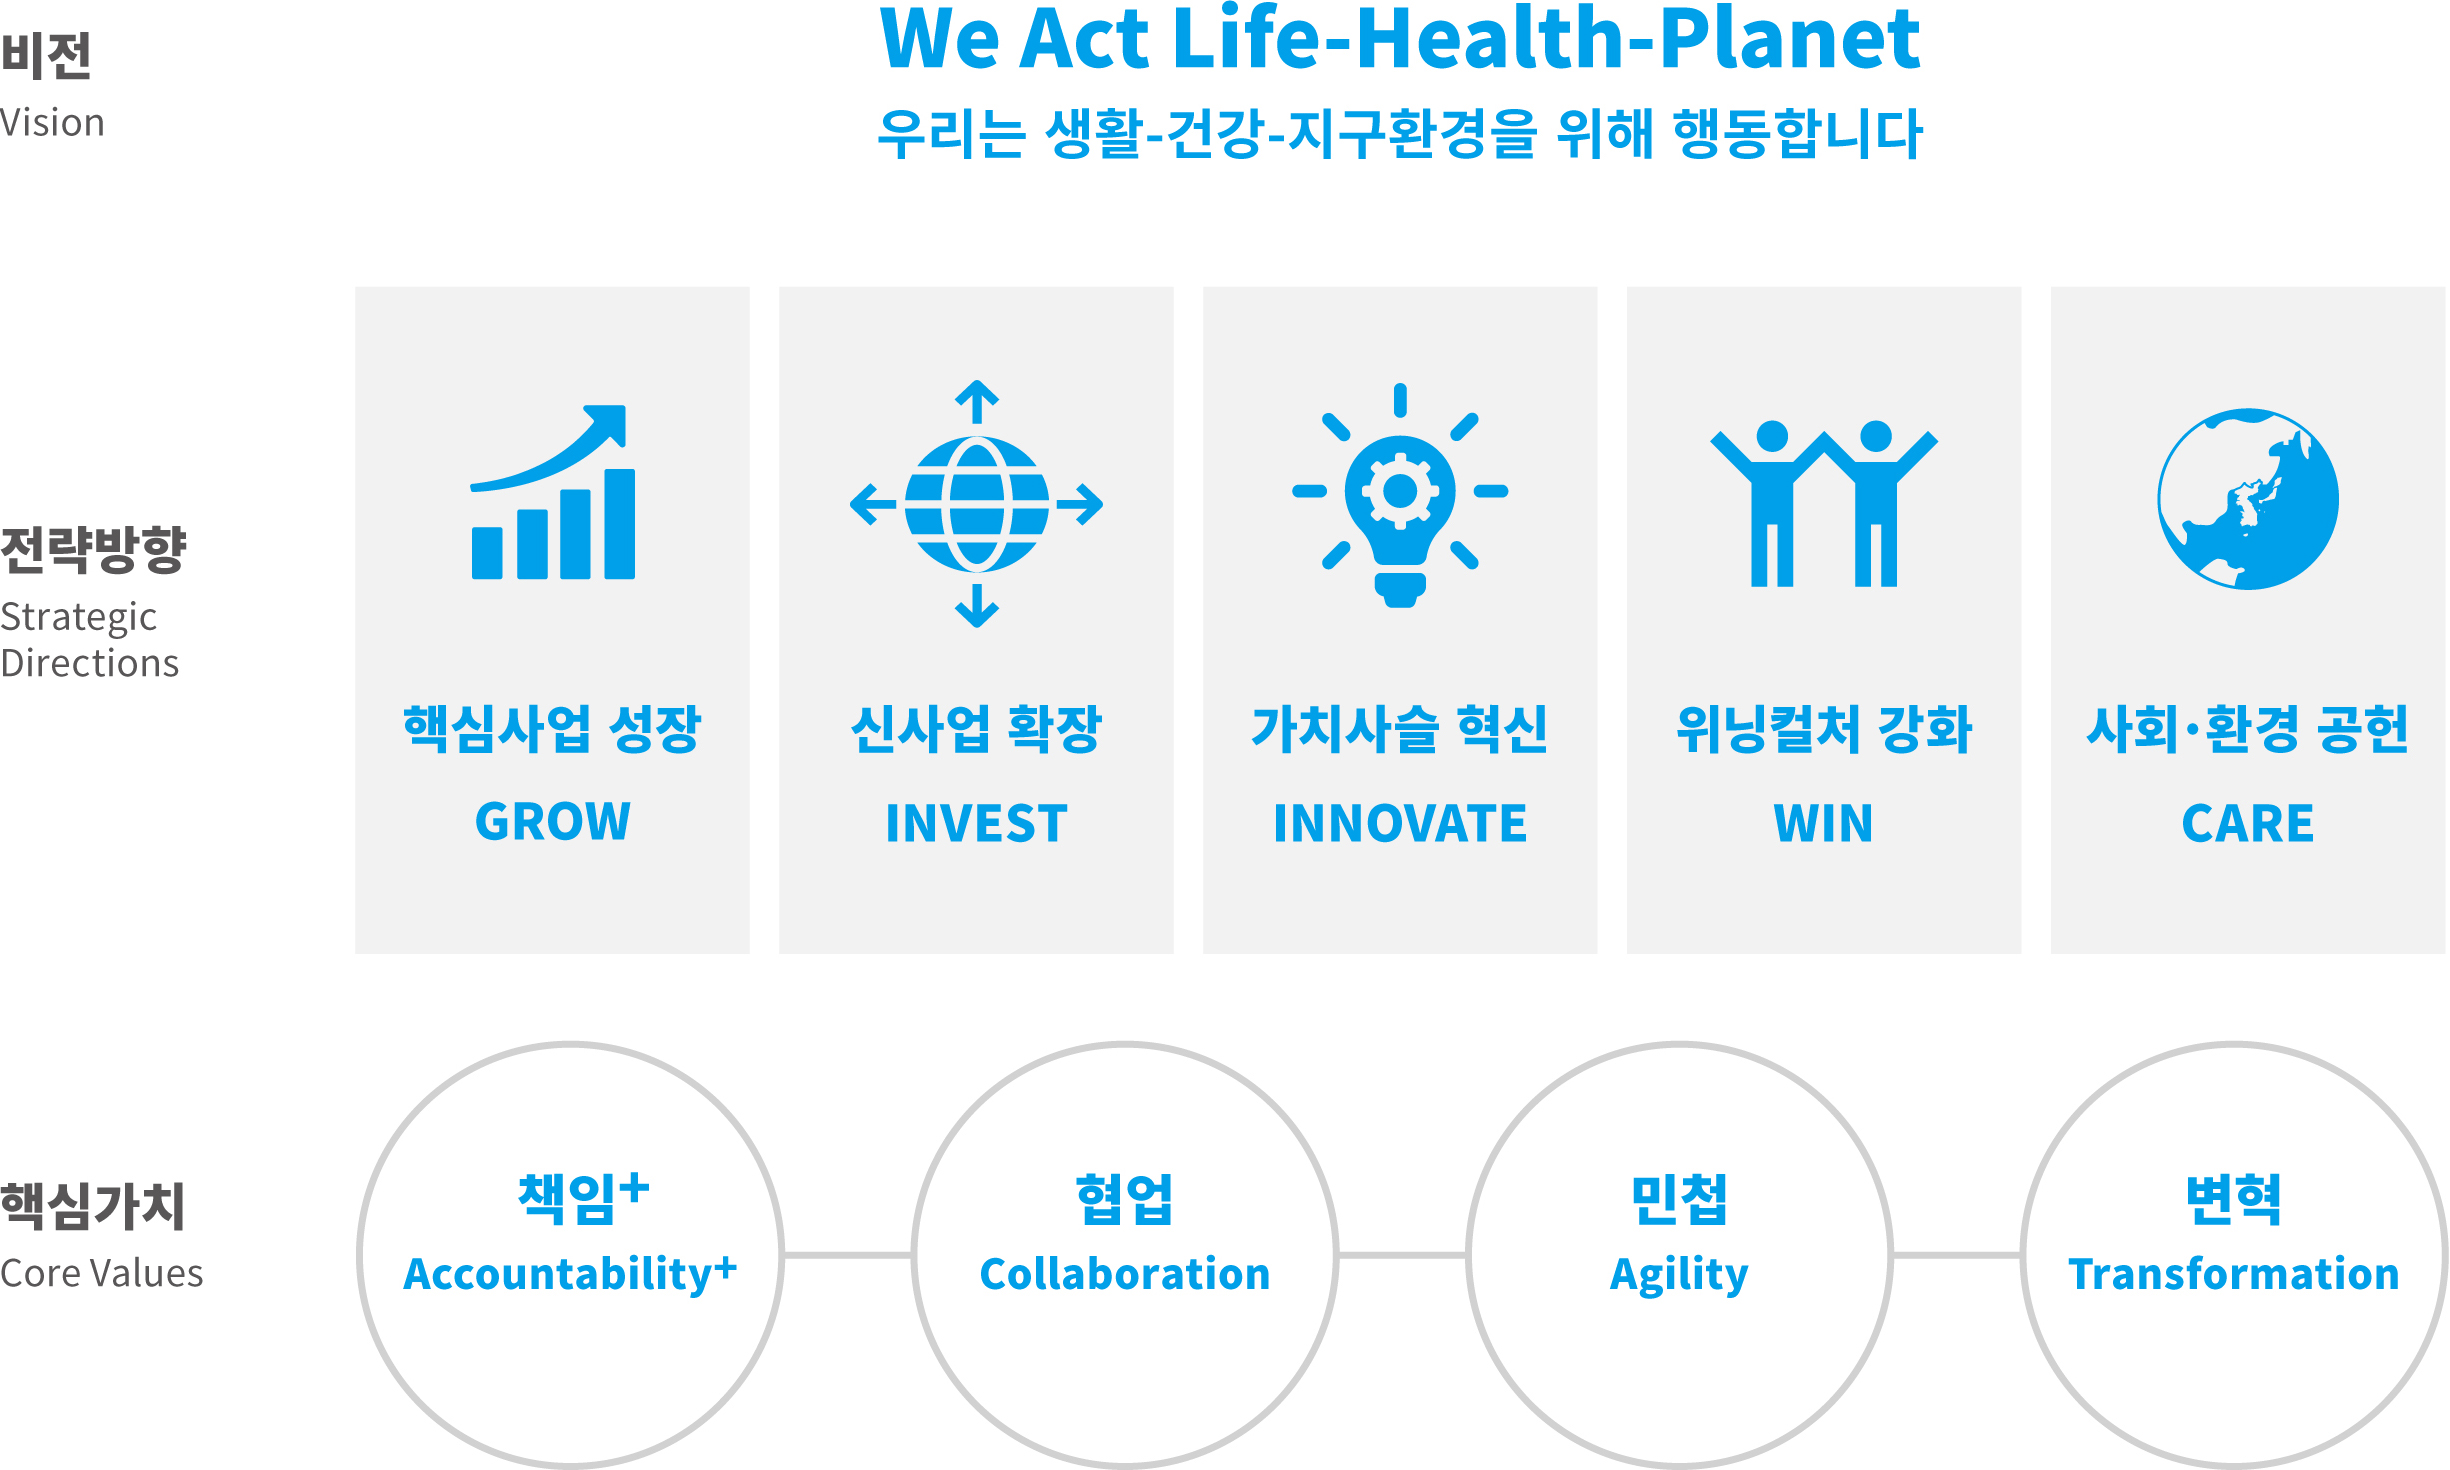 We Are Life-Health-Planet 우리는 생활-건강-지구환경을 위해 행동합니다.